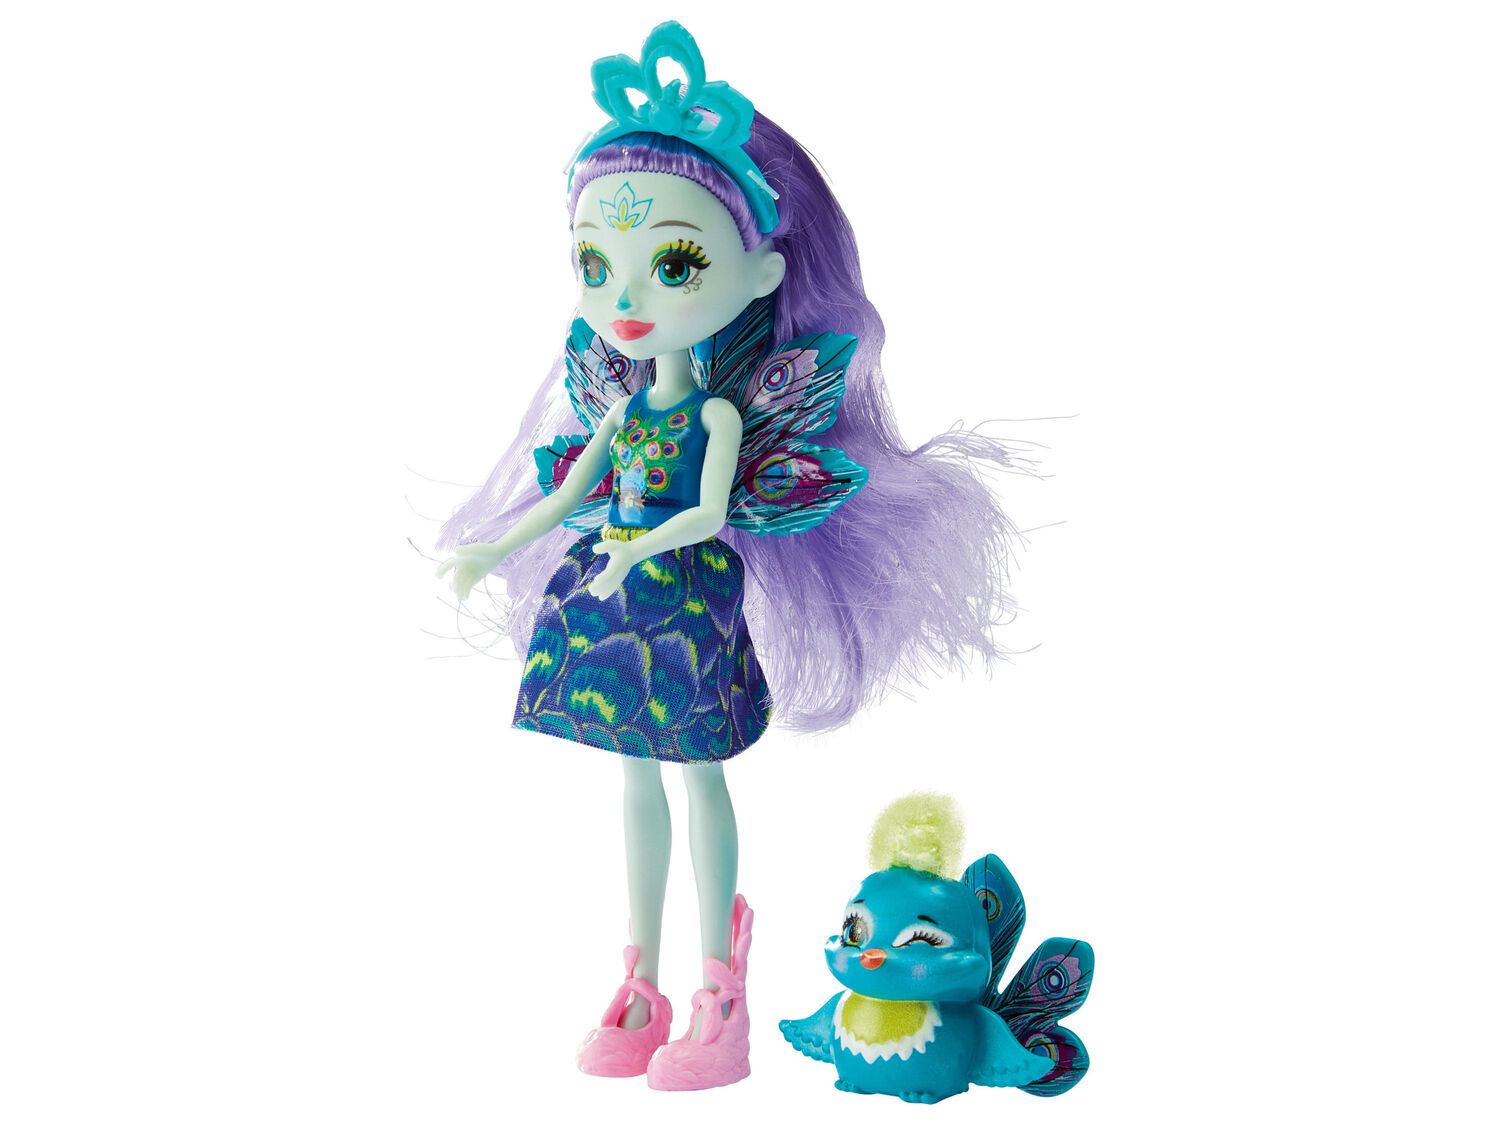 Bambola Enchantimals o Monster Truck Hot Wheels Mattel, prezzo 6.99 &#8364; ...